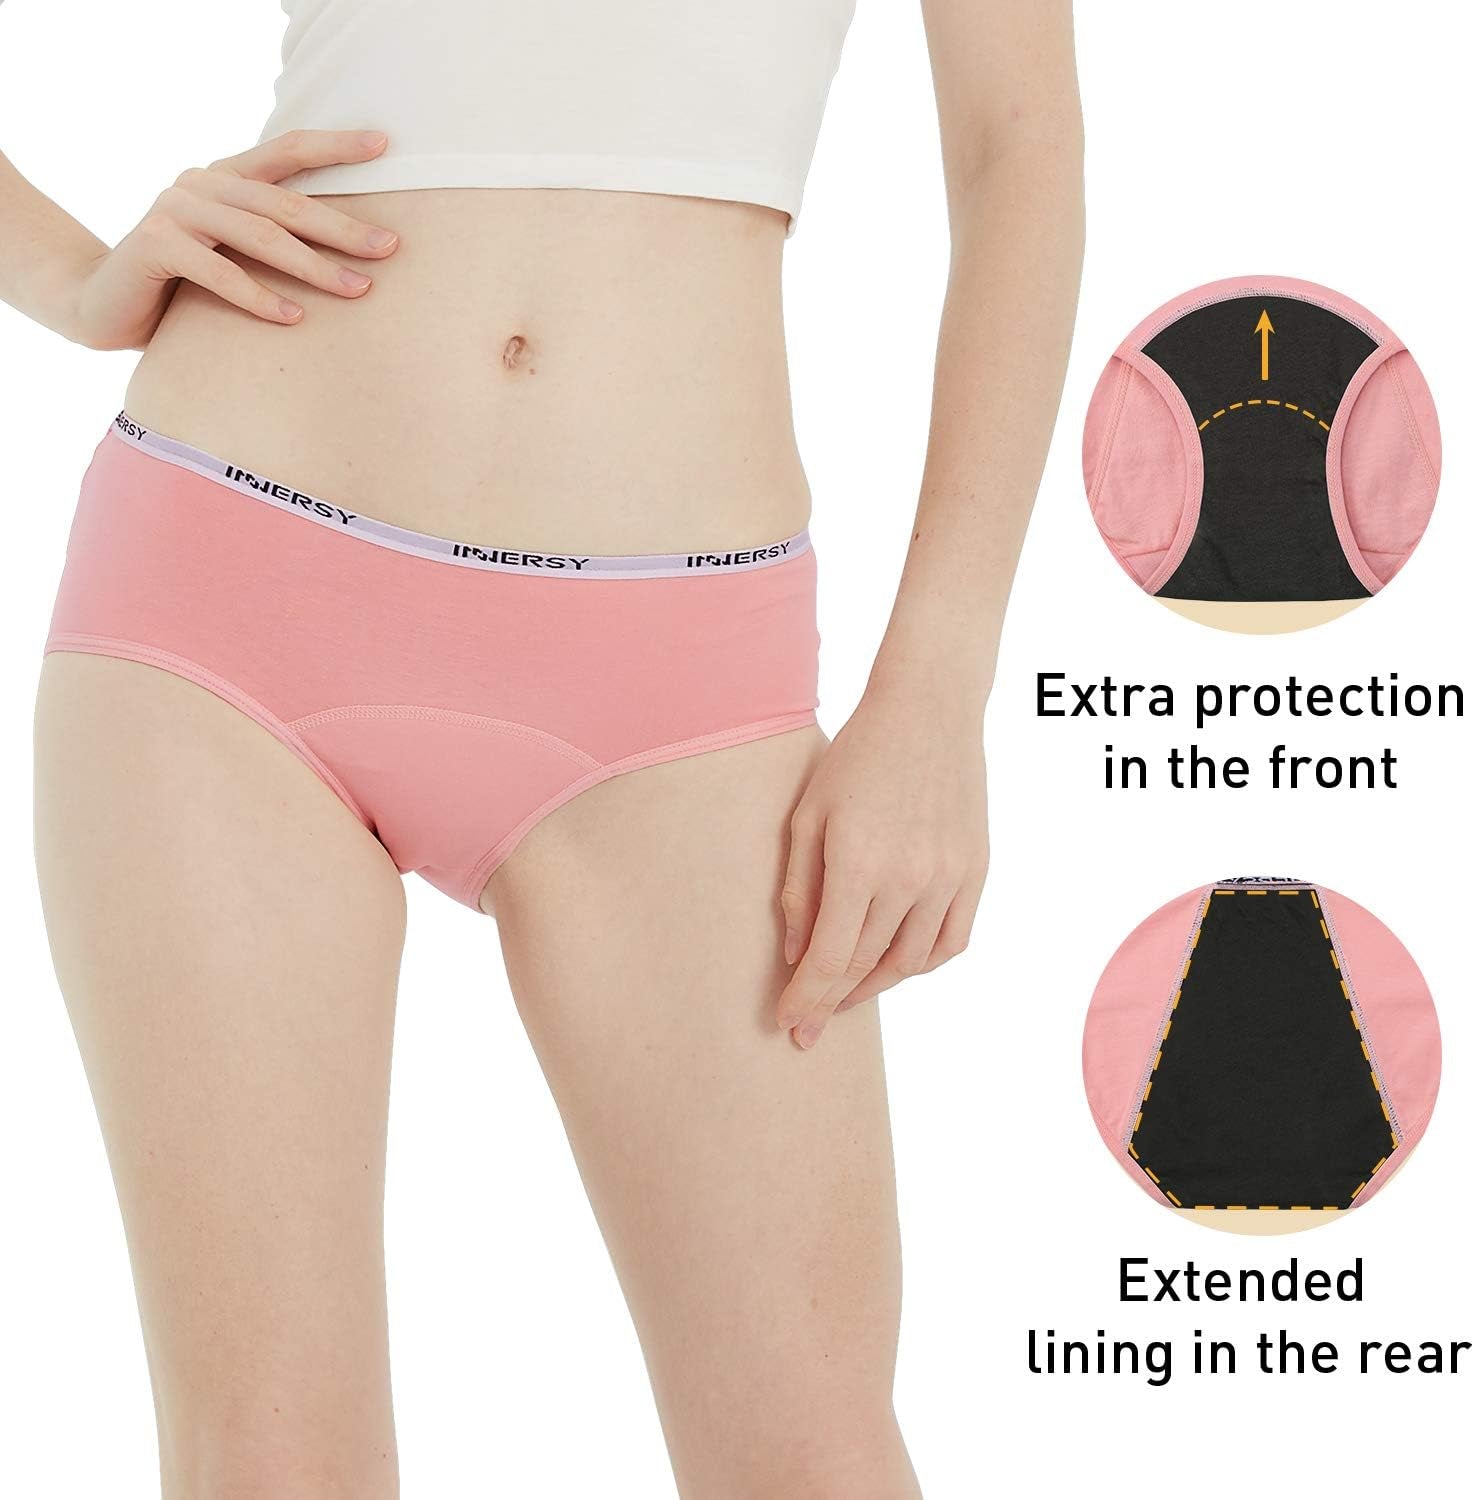 Teen Girls' Period Underwear for Age 8-16 Cotton Menstrual Panties